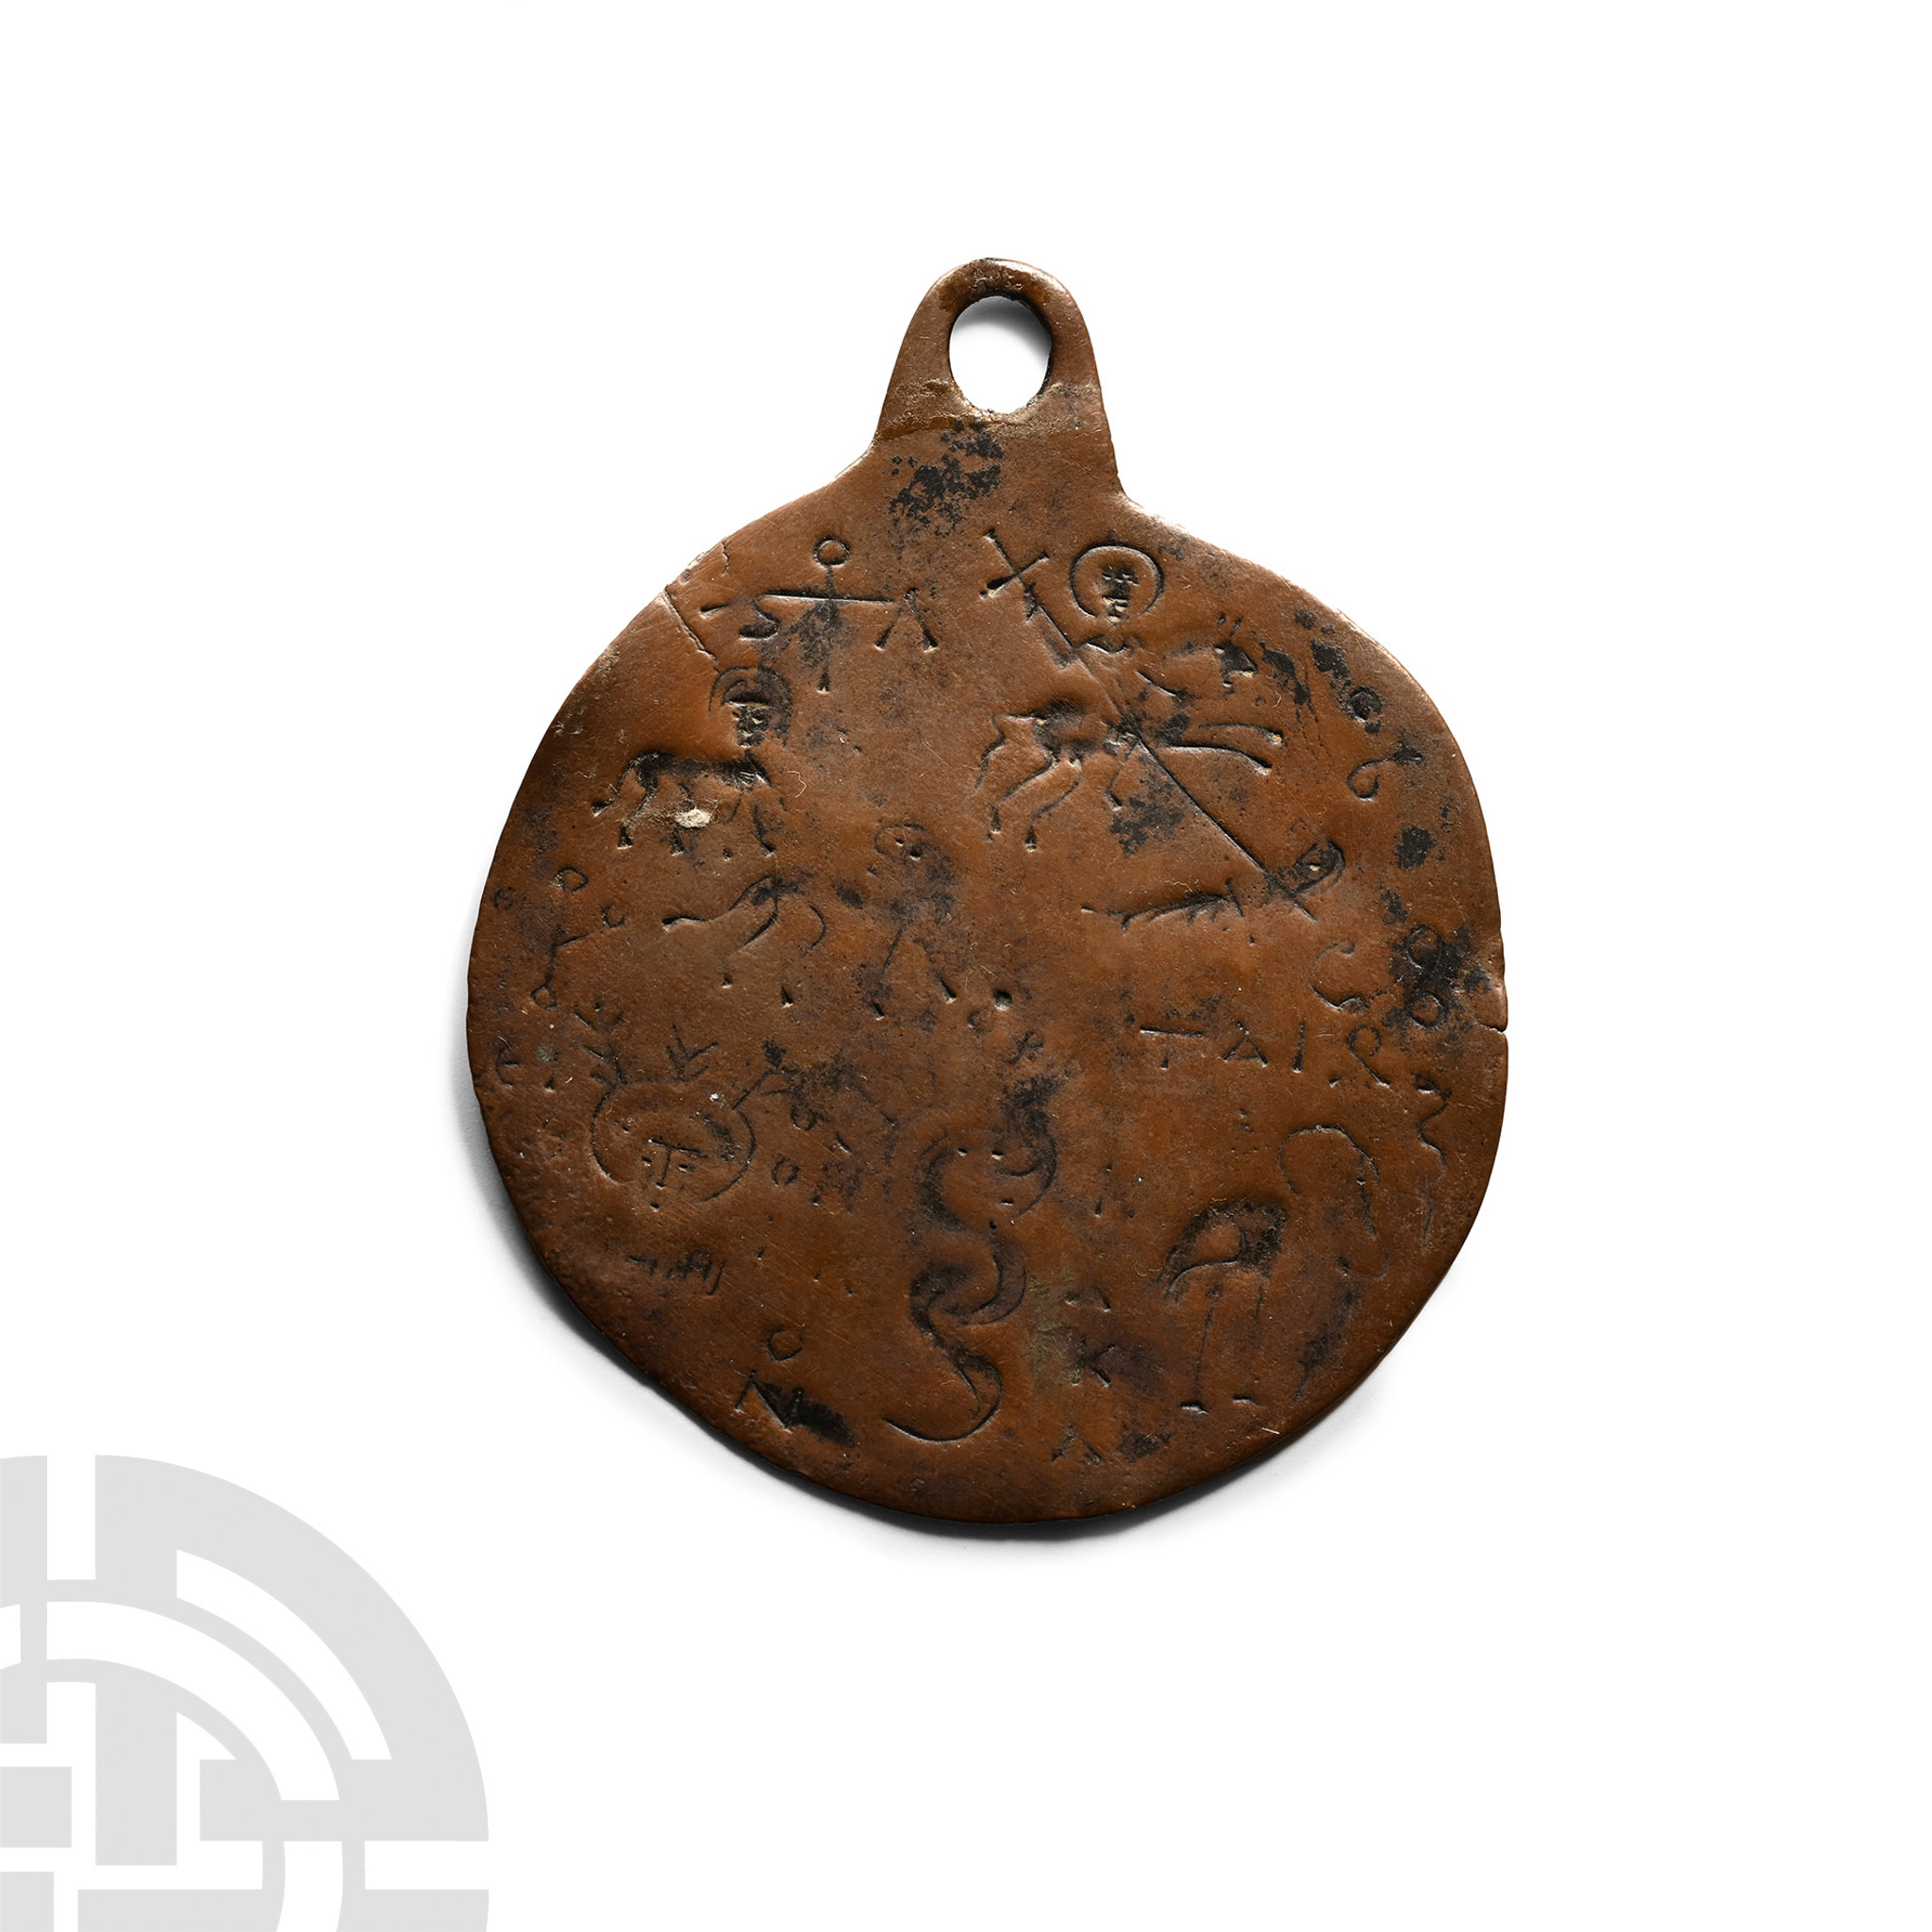 Byzantine 'Psalm 91 Related' Gnostic Bronze Talisman Pendant - Image 2 of 2